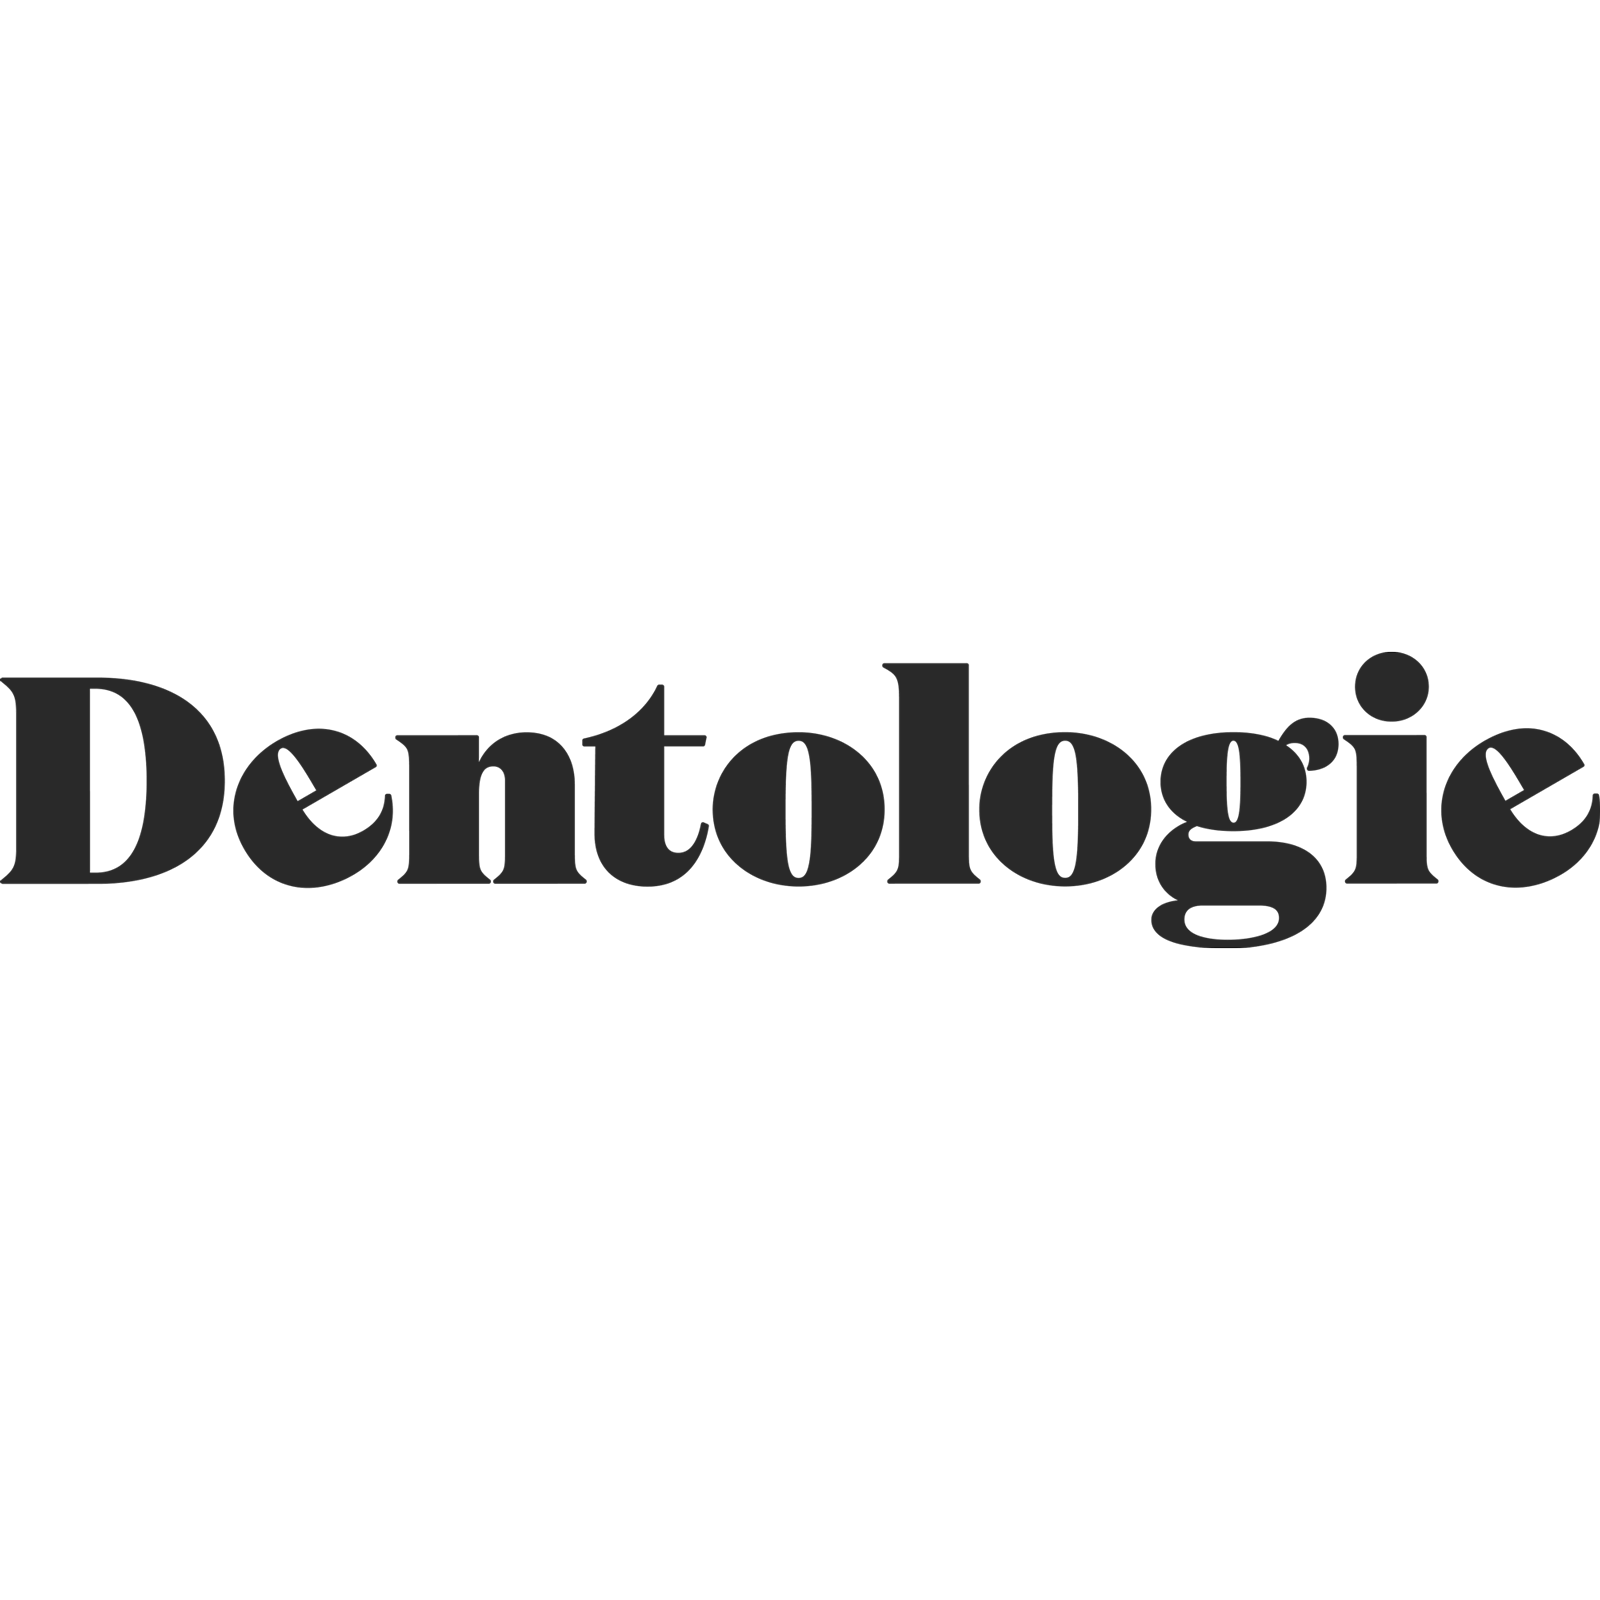 Dentologie logo